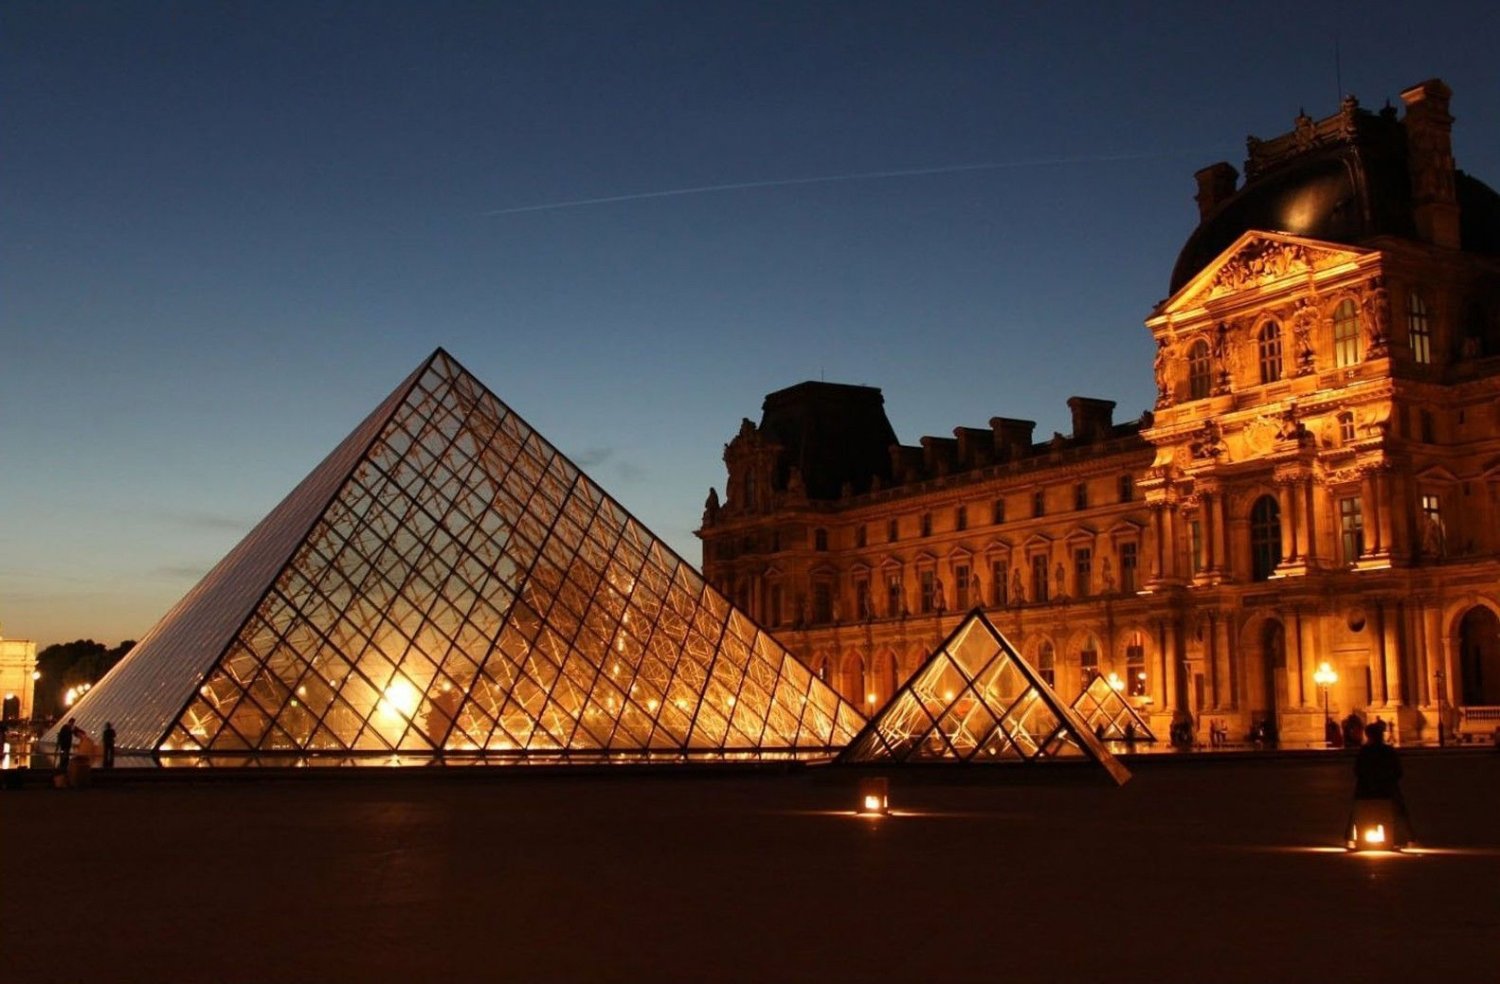 Louvre home. Музеи. Лувр. Париж. Франция дворец Лувр. Королевский дворец Лувр. Ночной Лувр Париж.